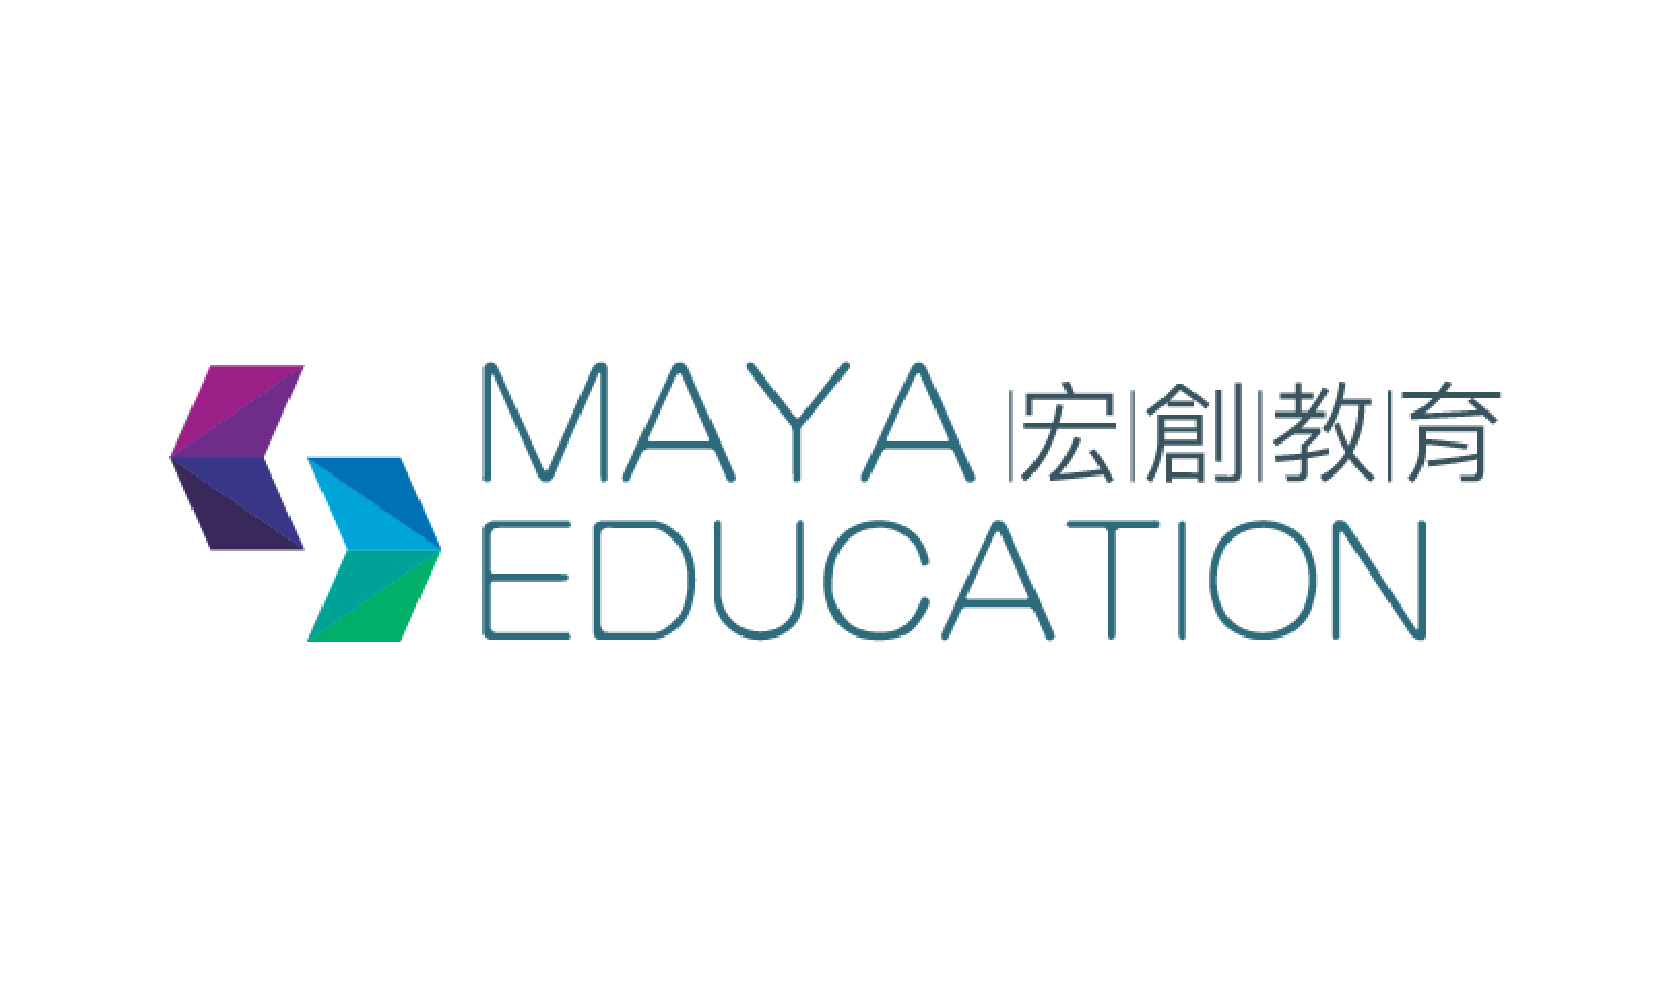 MAYA Education